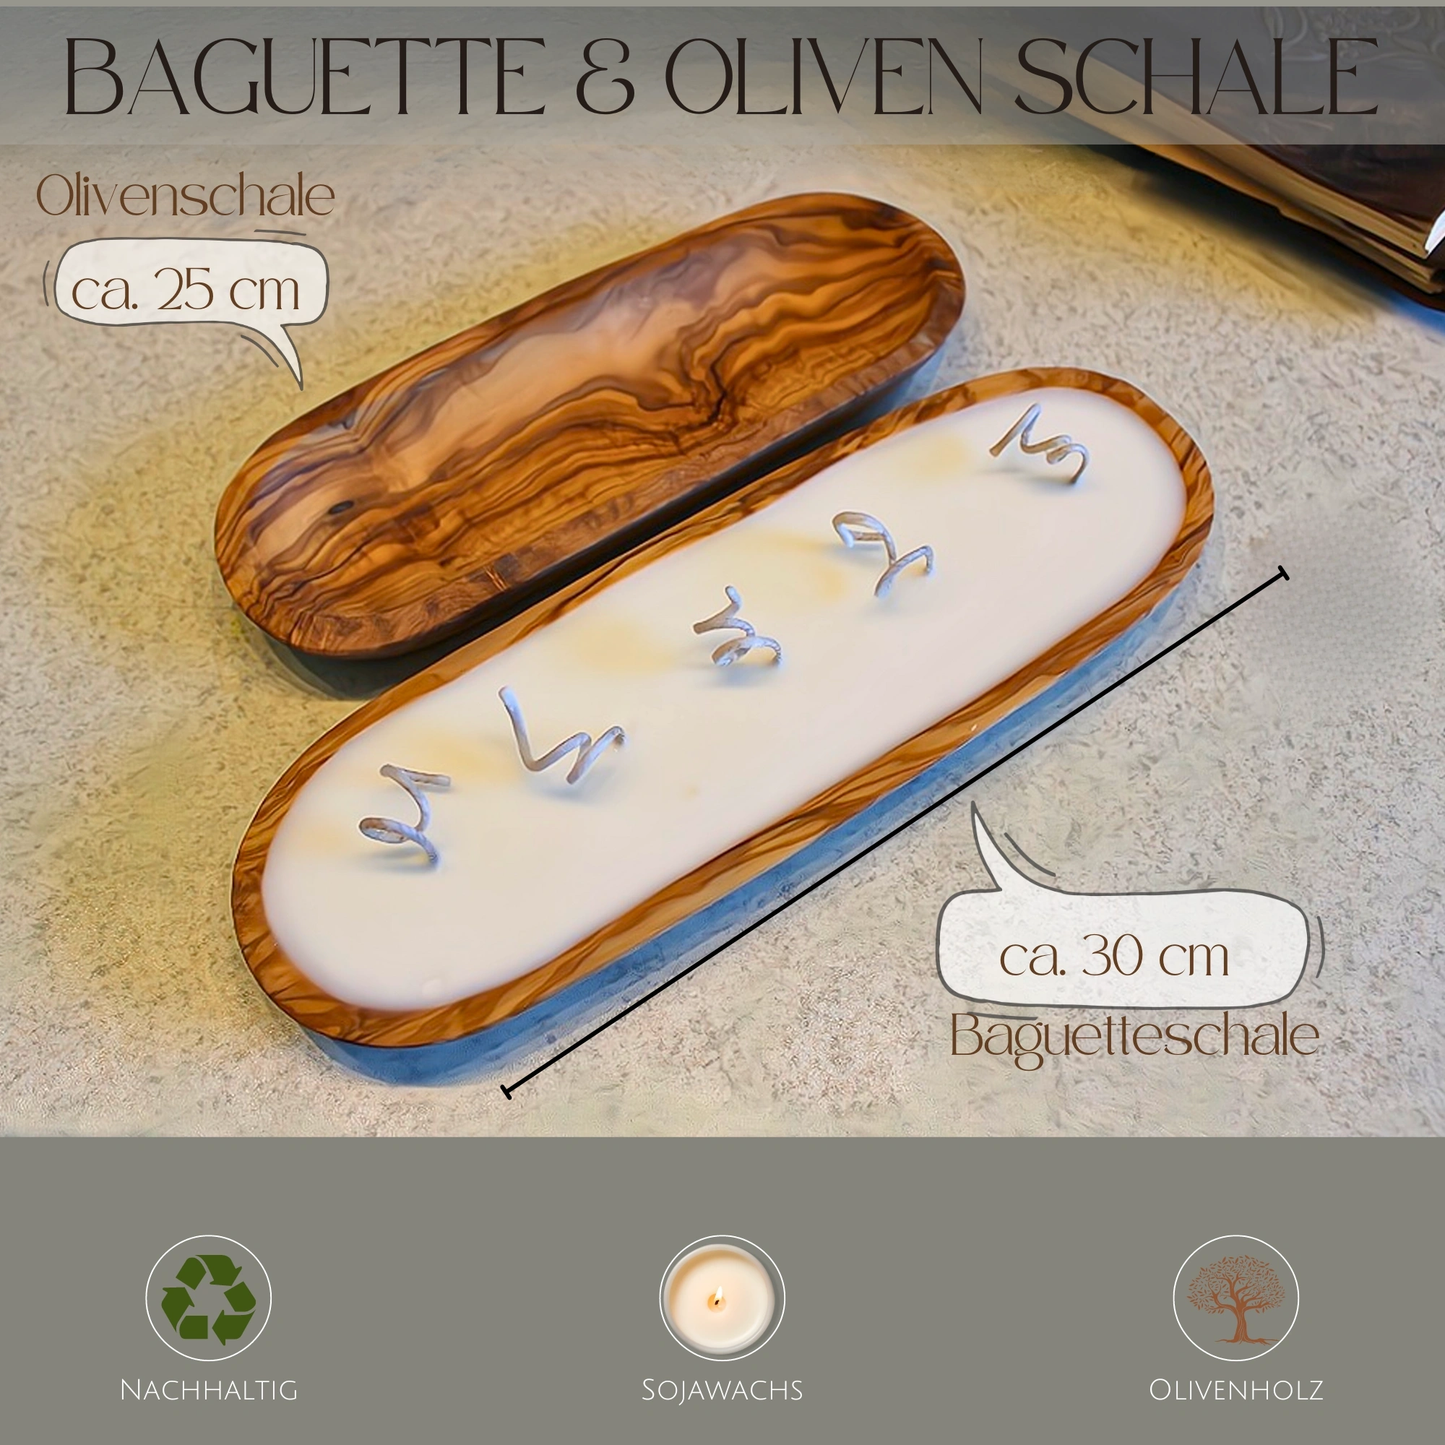 Sojawachskerze in Olivenholzschale "Baguette" 30 cm Relax